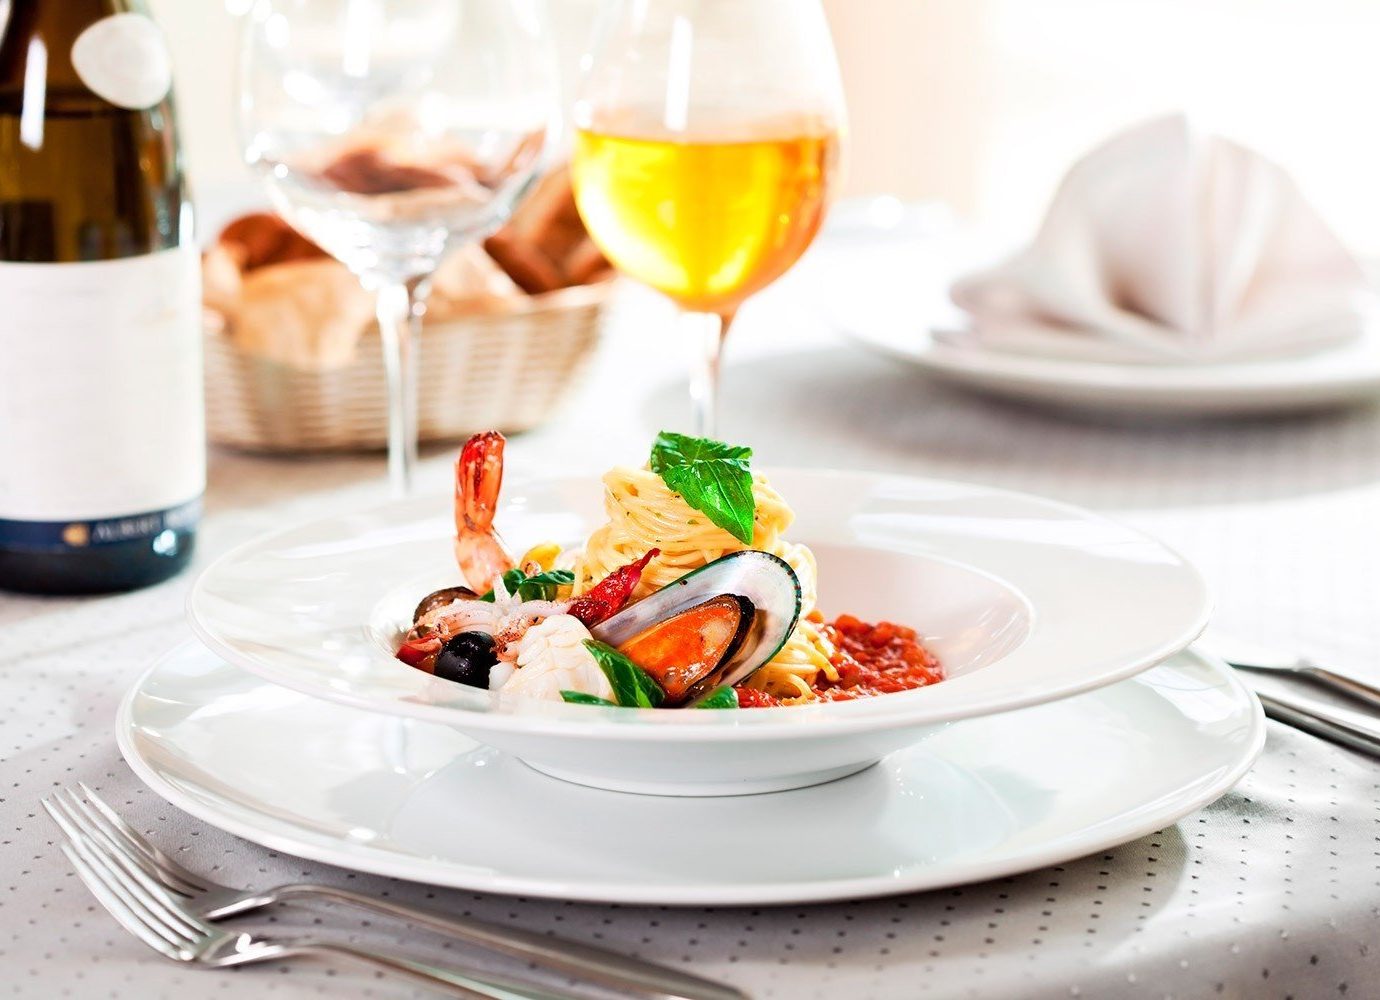 Travel Tips plate table dish food meal breakfast produce brunch cuisine sense restaurant